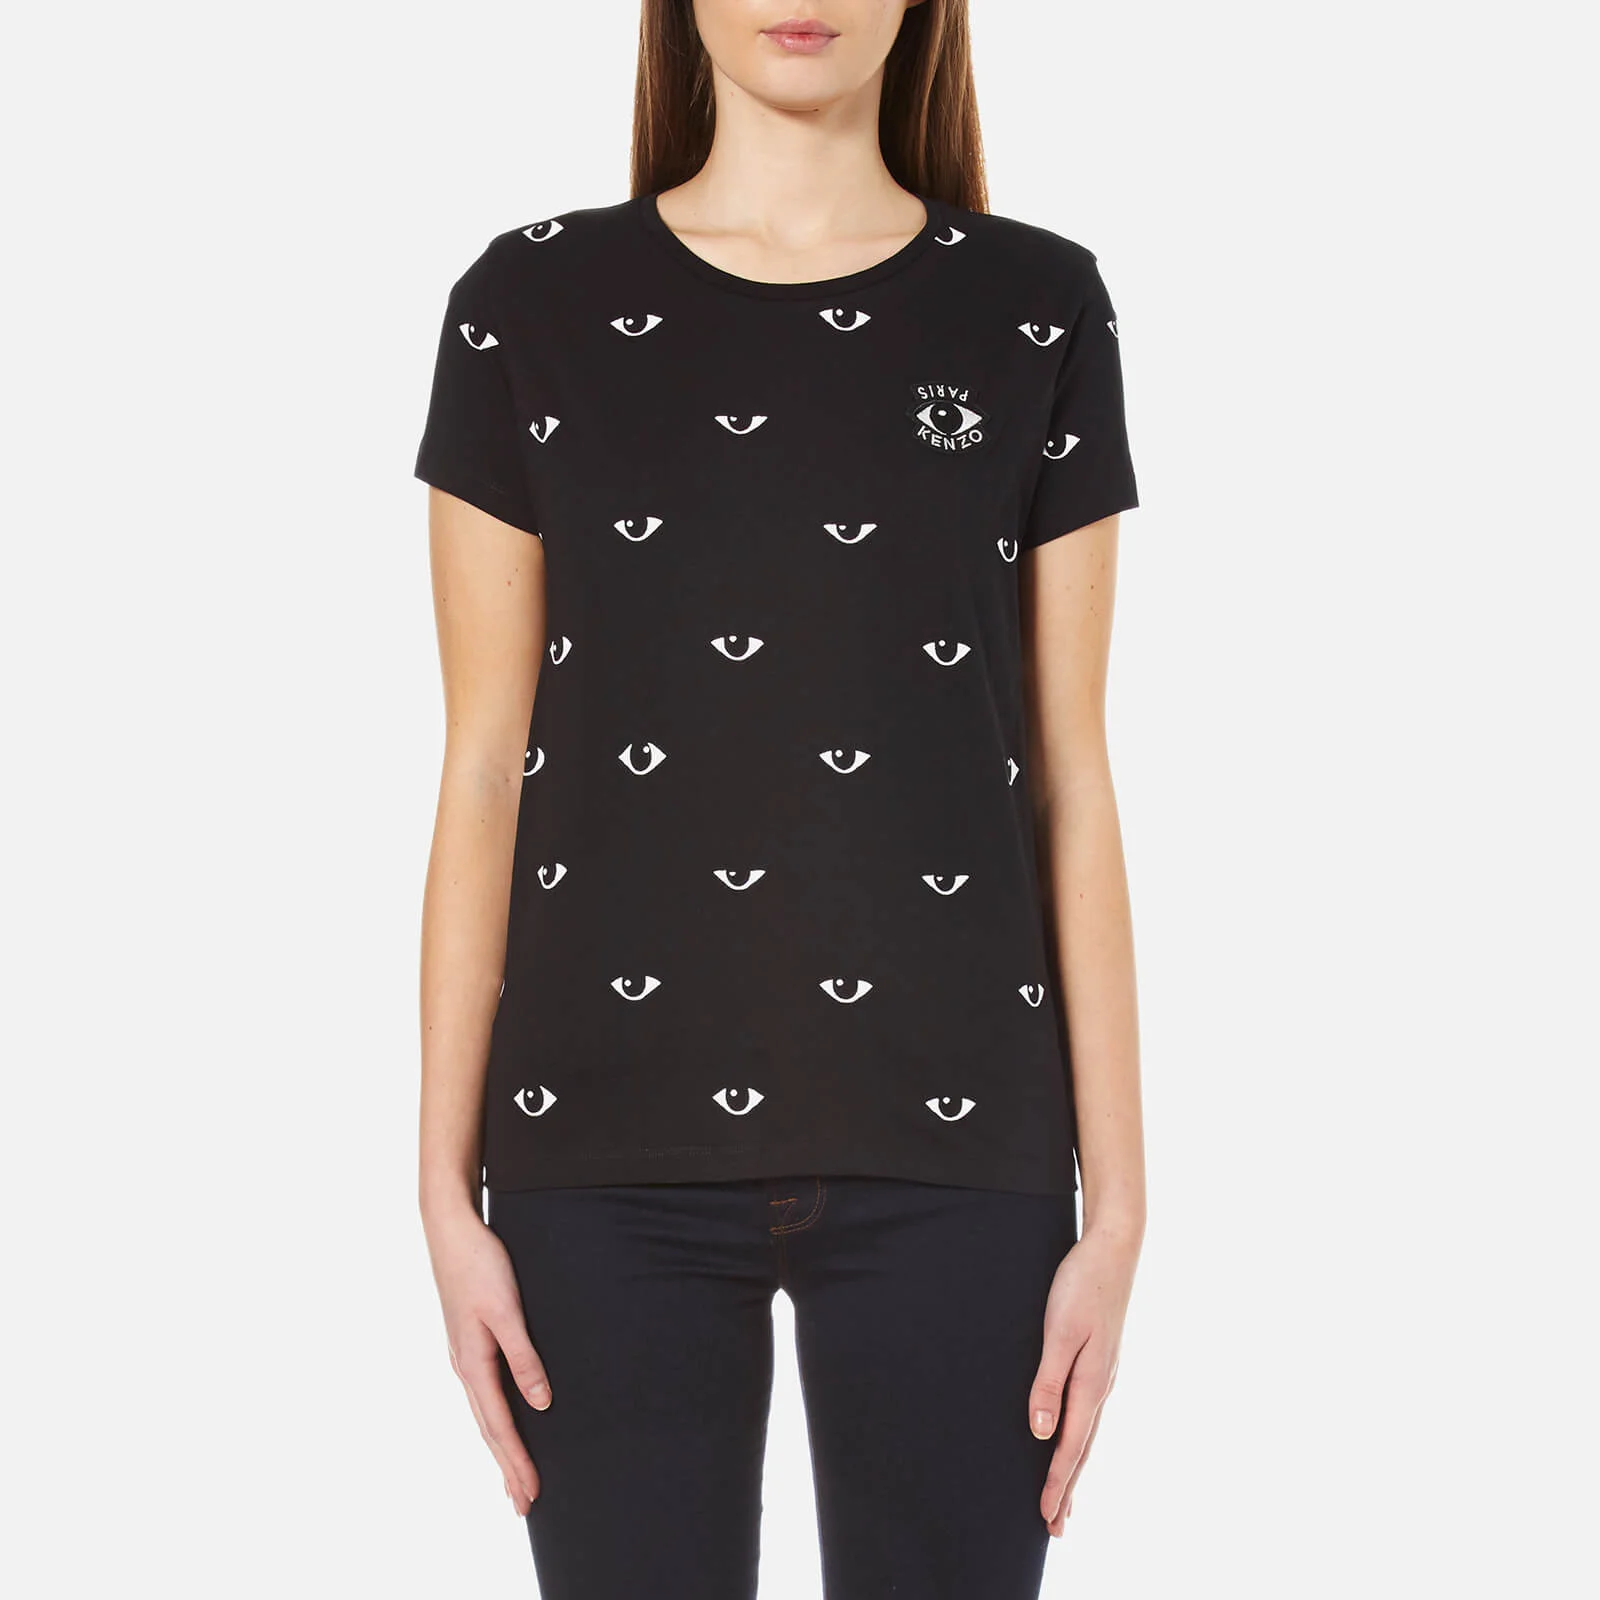 KENZO Women's Allover Eyes Printed Cotton T-Shirt - Black Image 1